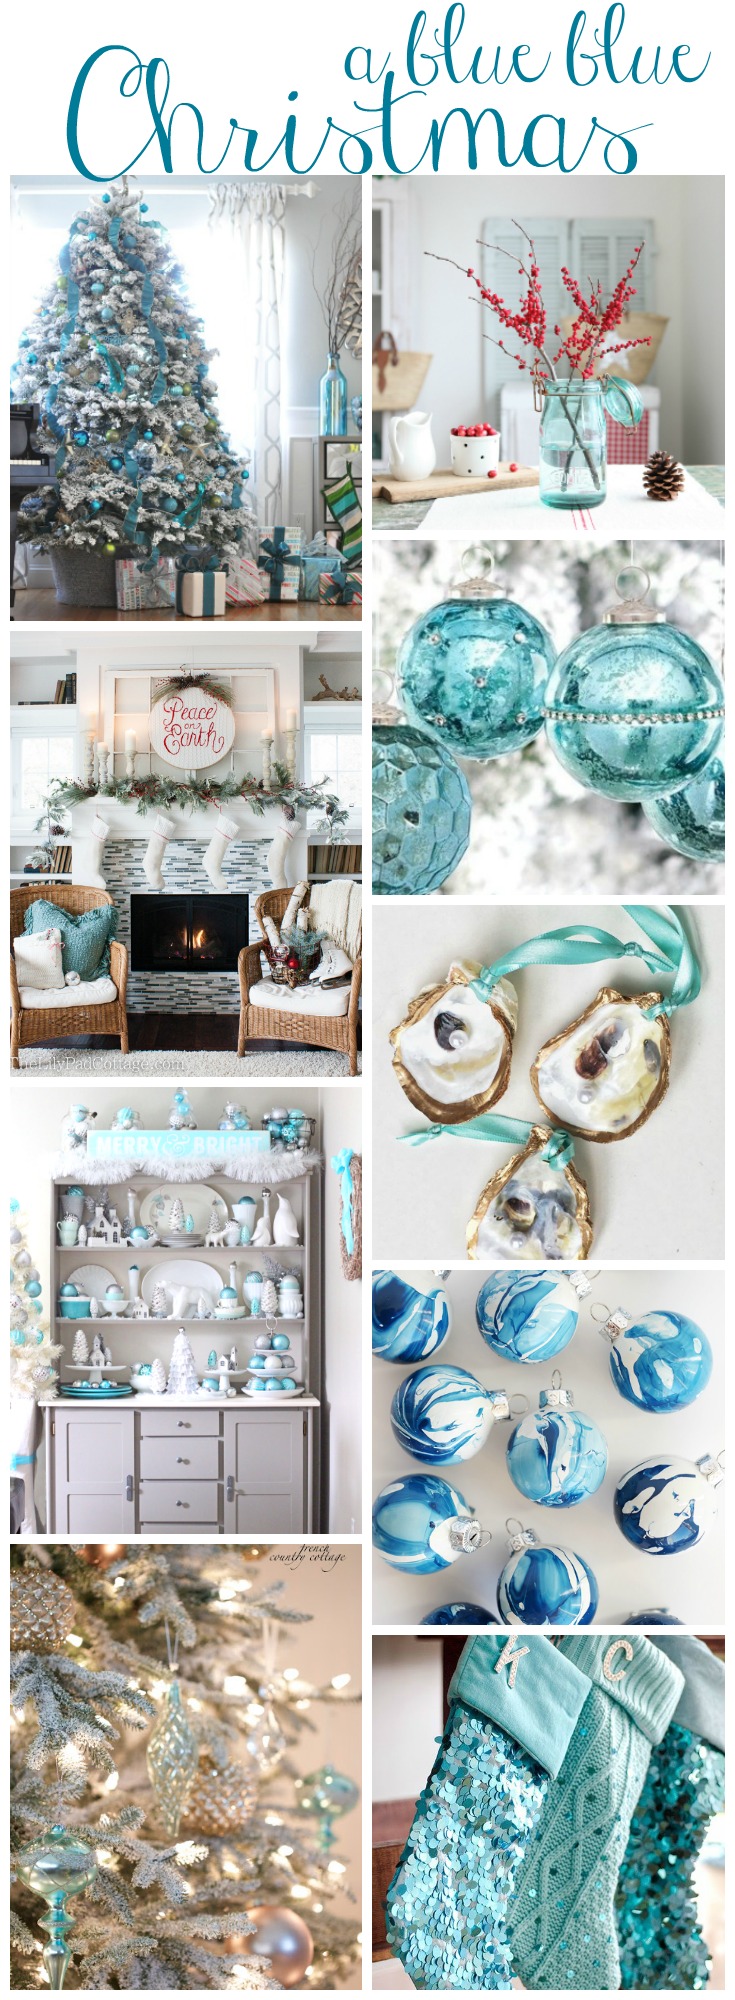 a-blue-blue-christmas-style-series-decor-diy-and-blue-christmas-inspiration